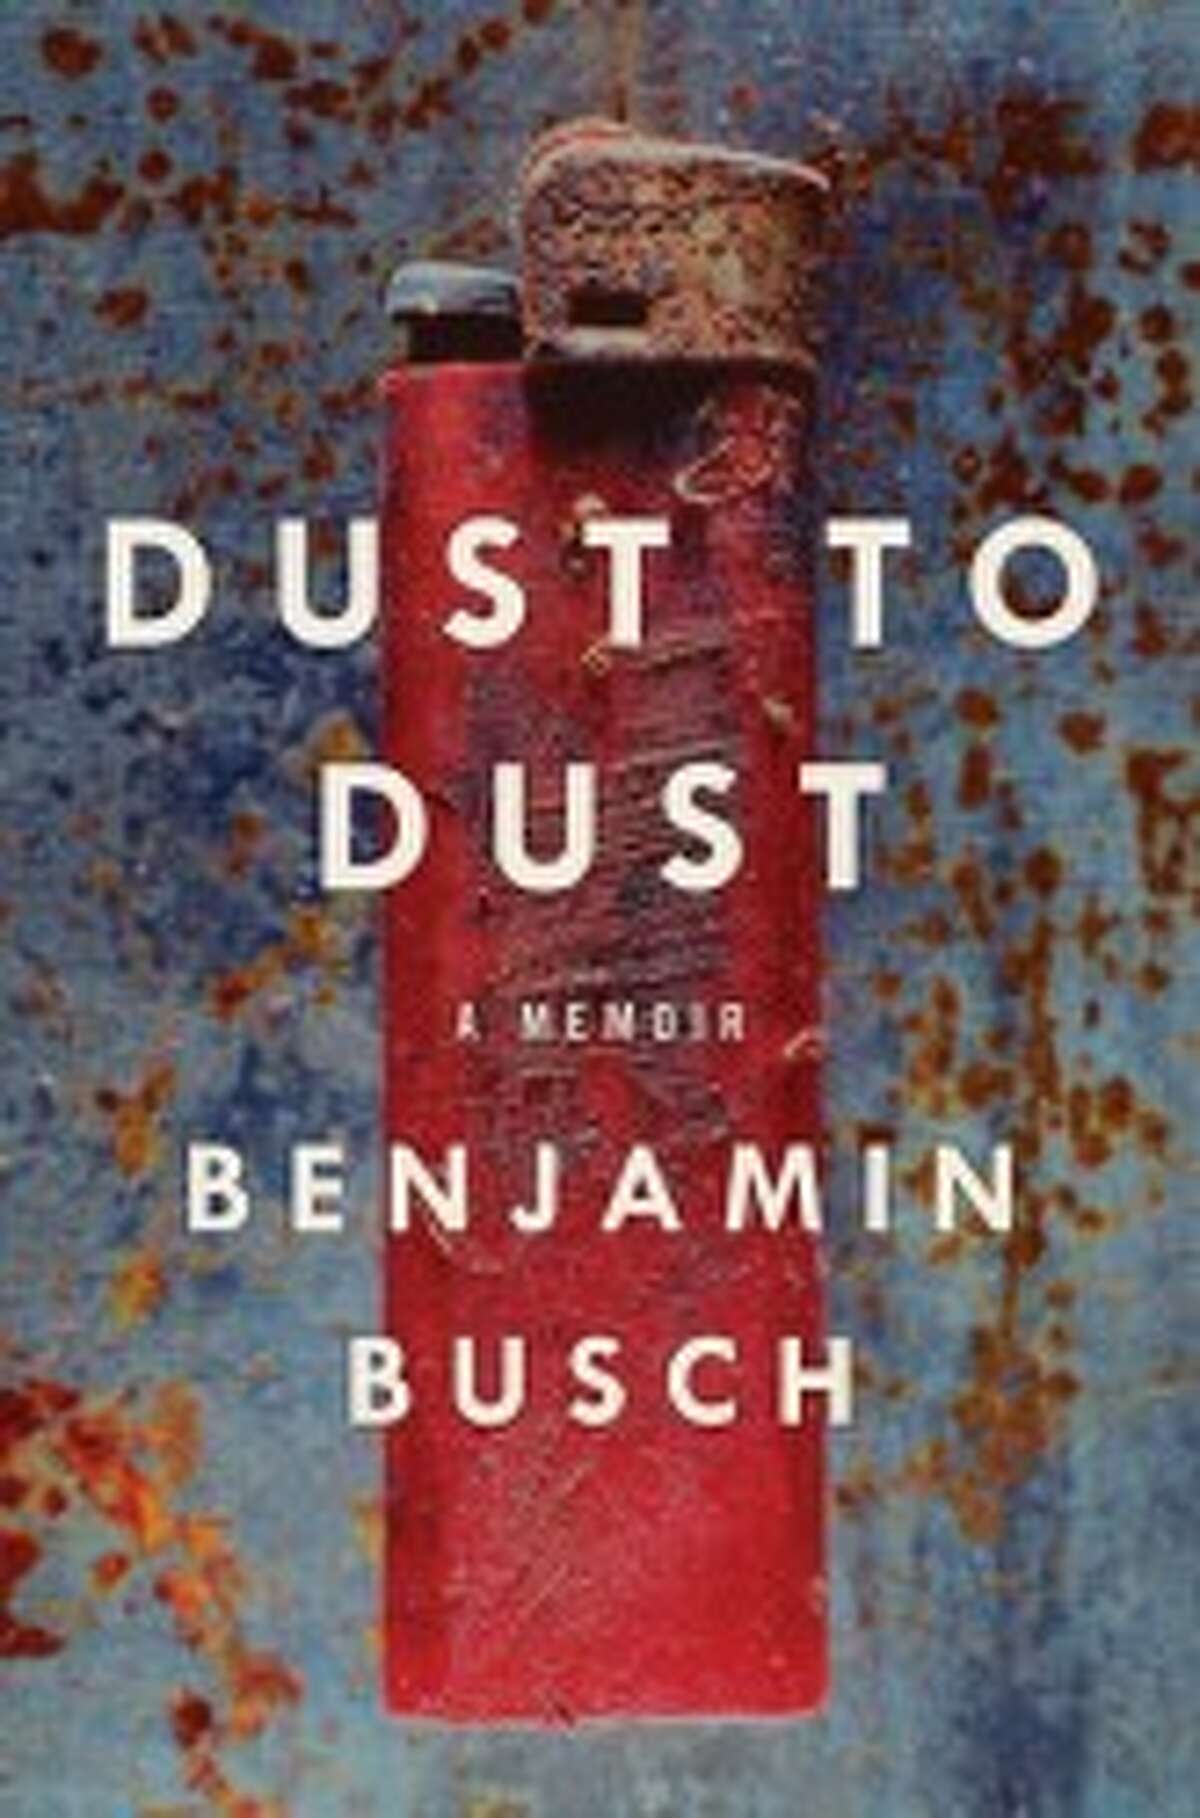 DUST TO DUST: A memoir by Benjamin Busch